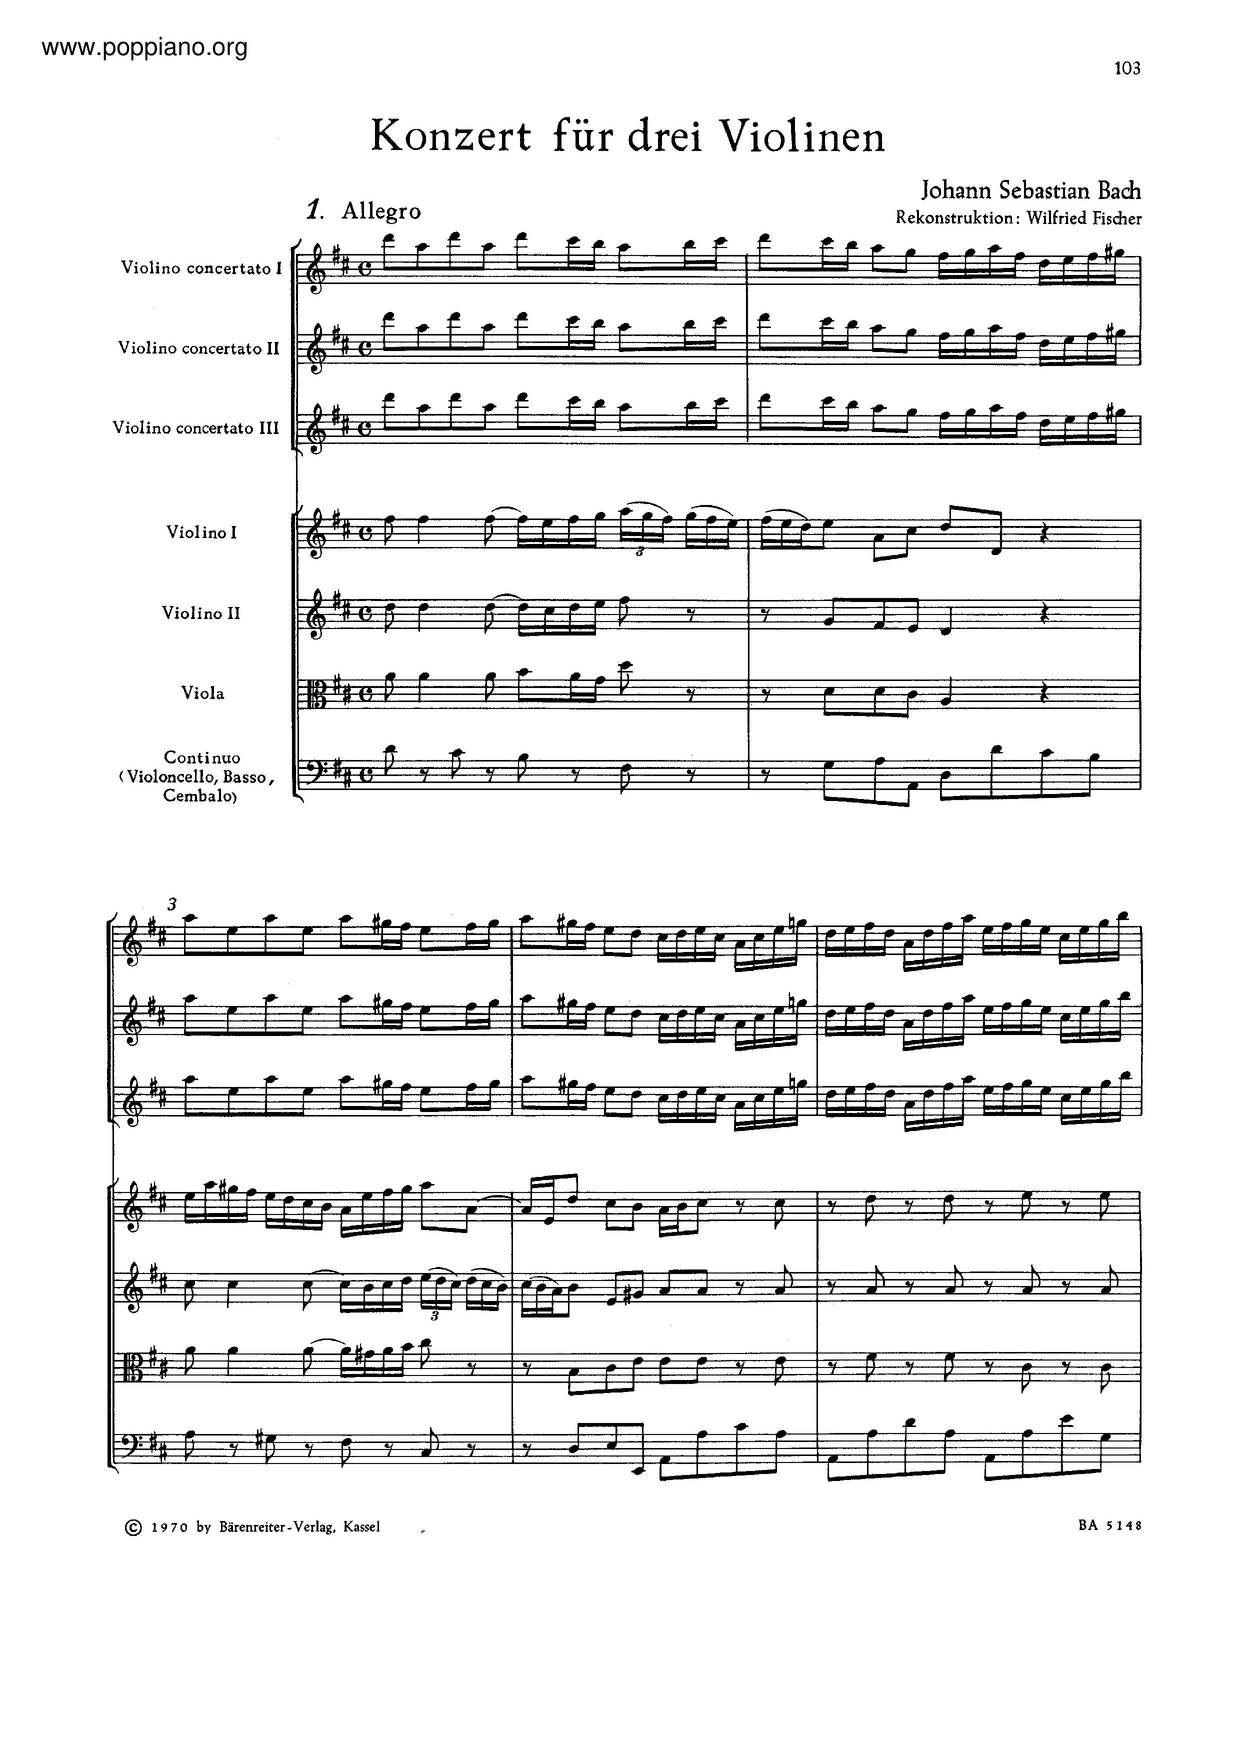 Concerto For 3 Violins In D Major, BWV 1064R琴谱